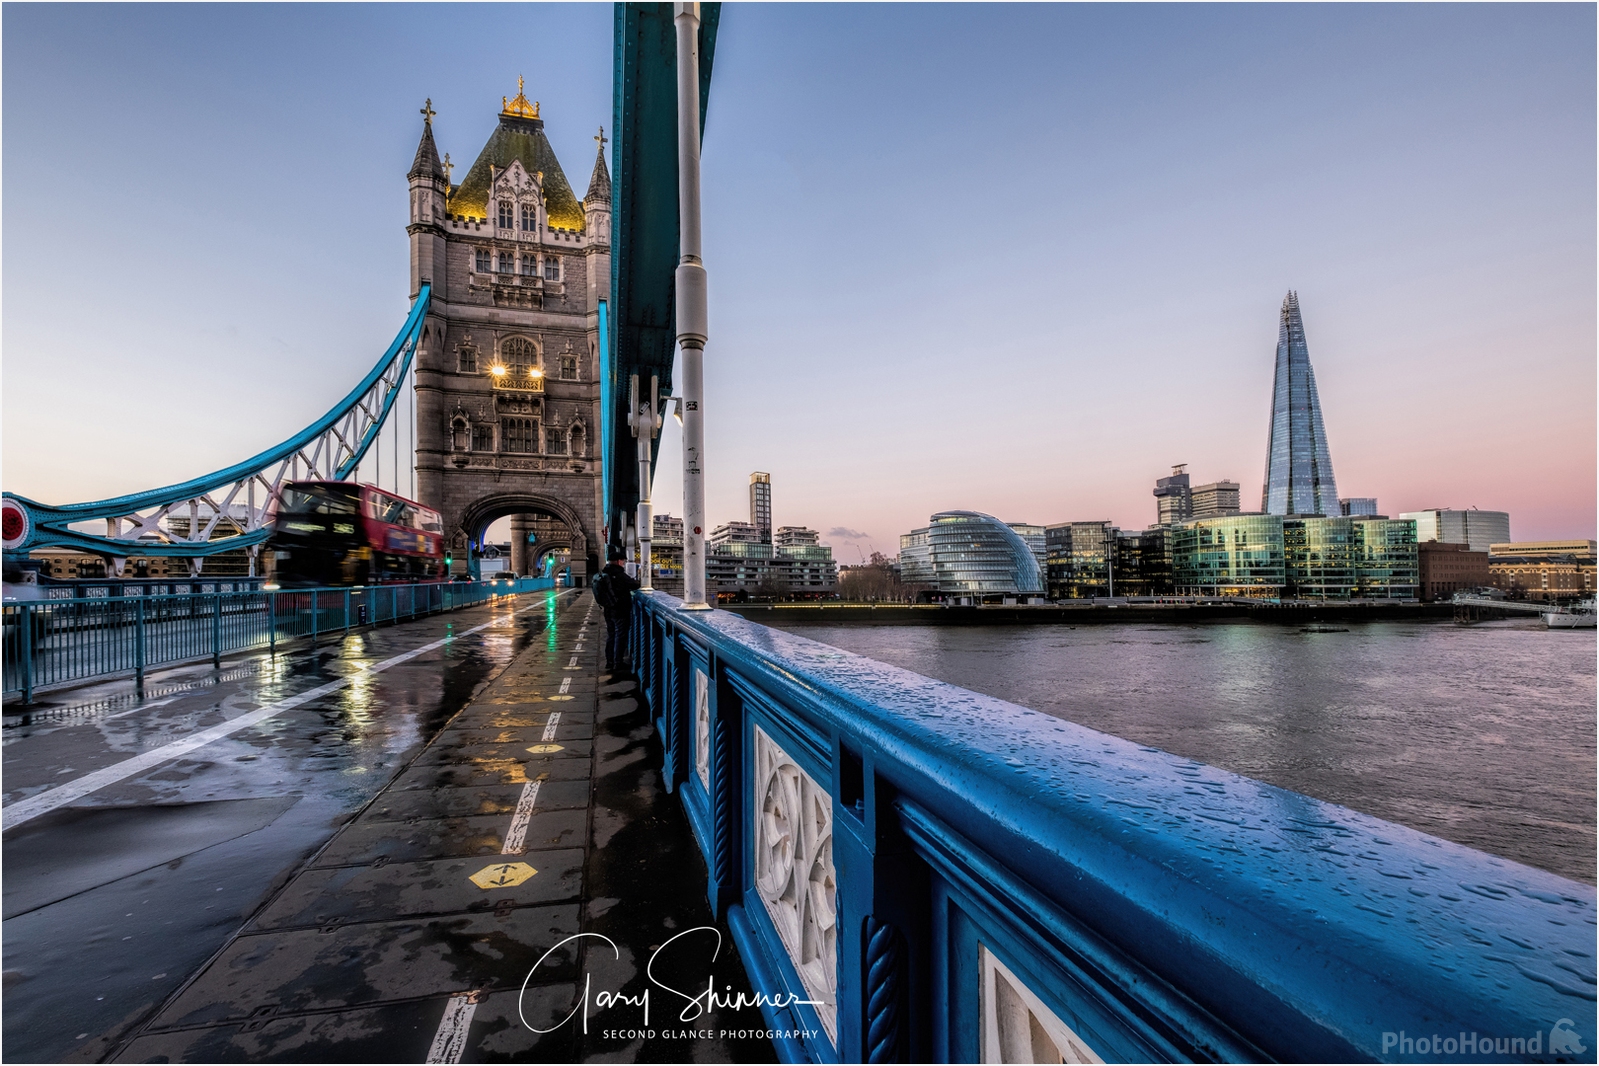 Image of On Tower Bridge by Gary Shinner